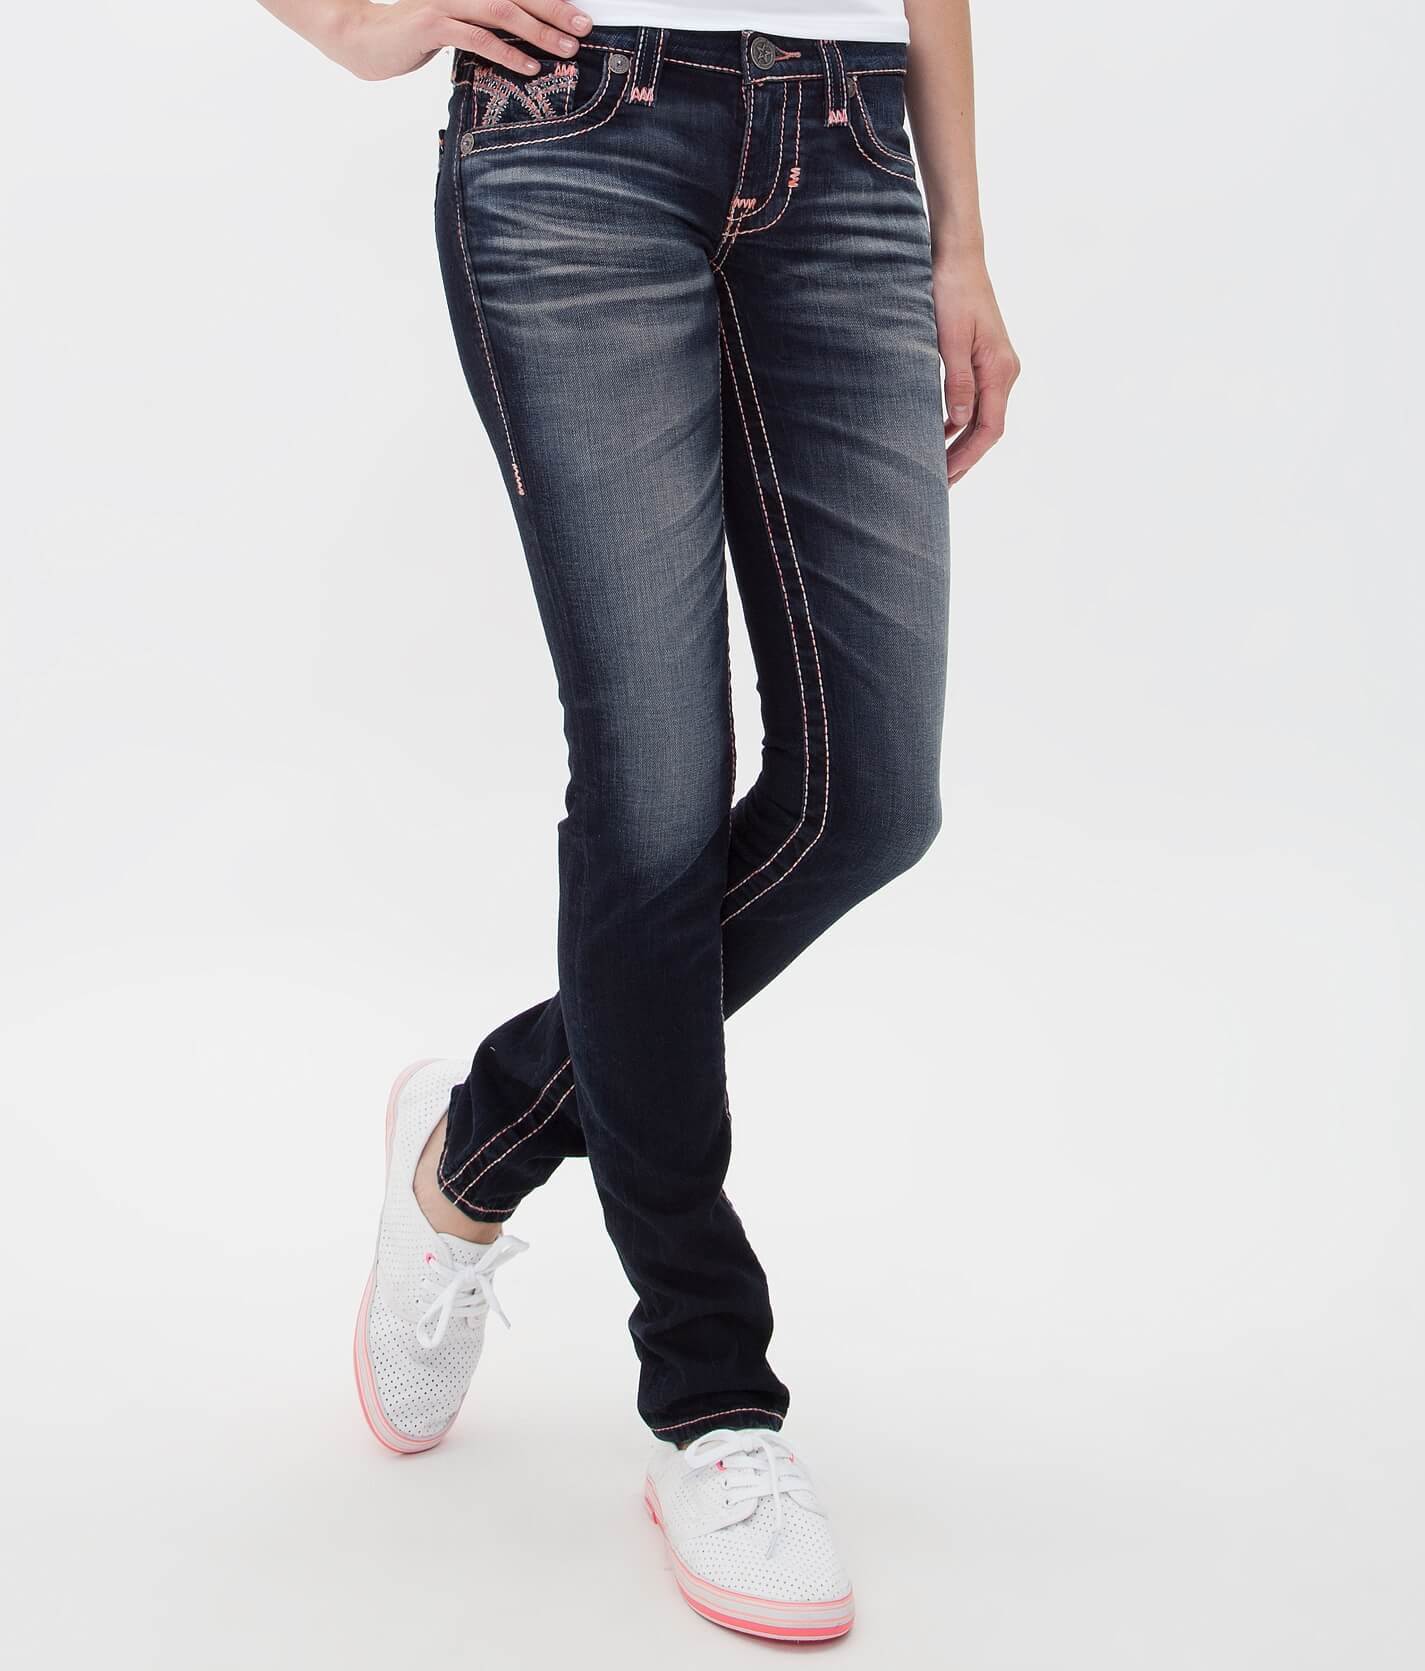 slim jeans for girls